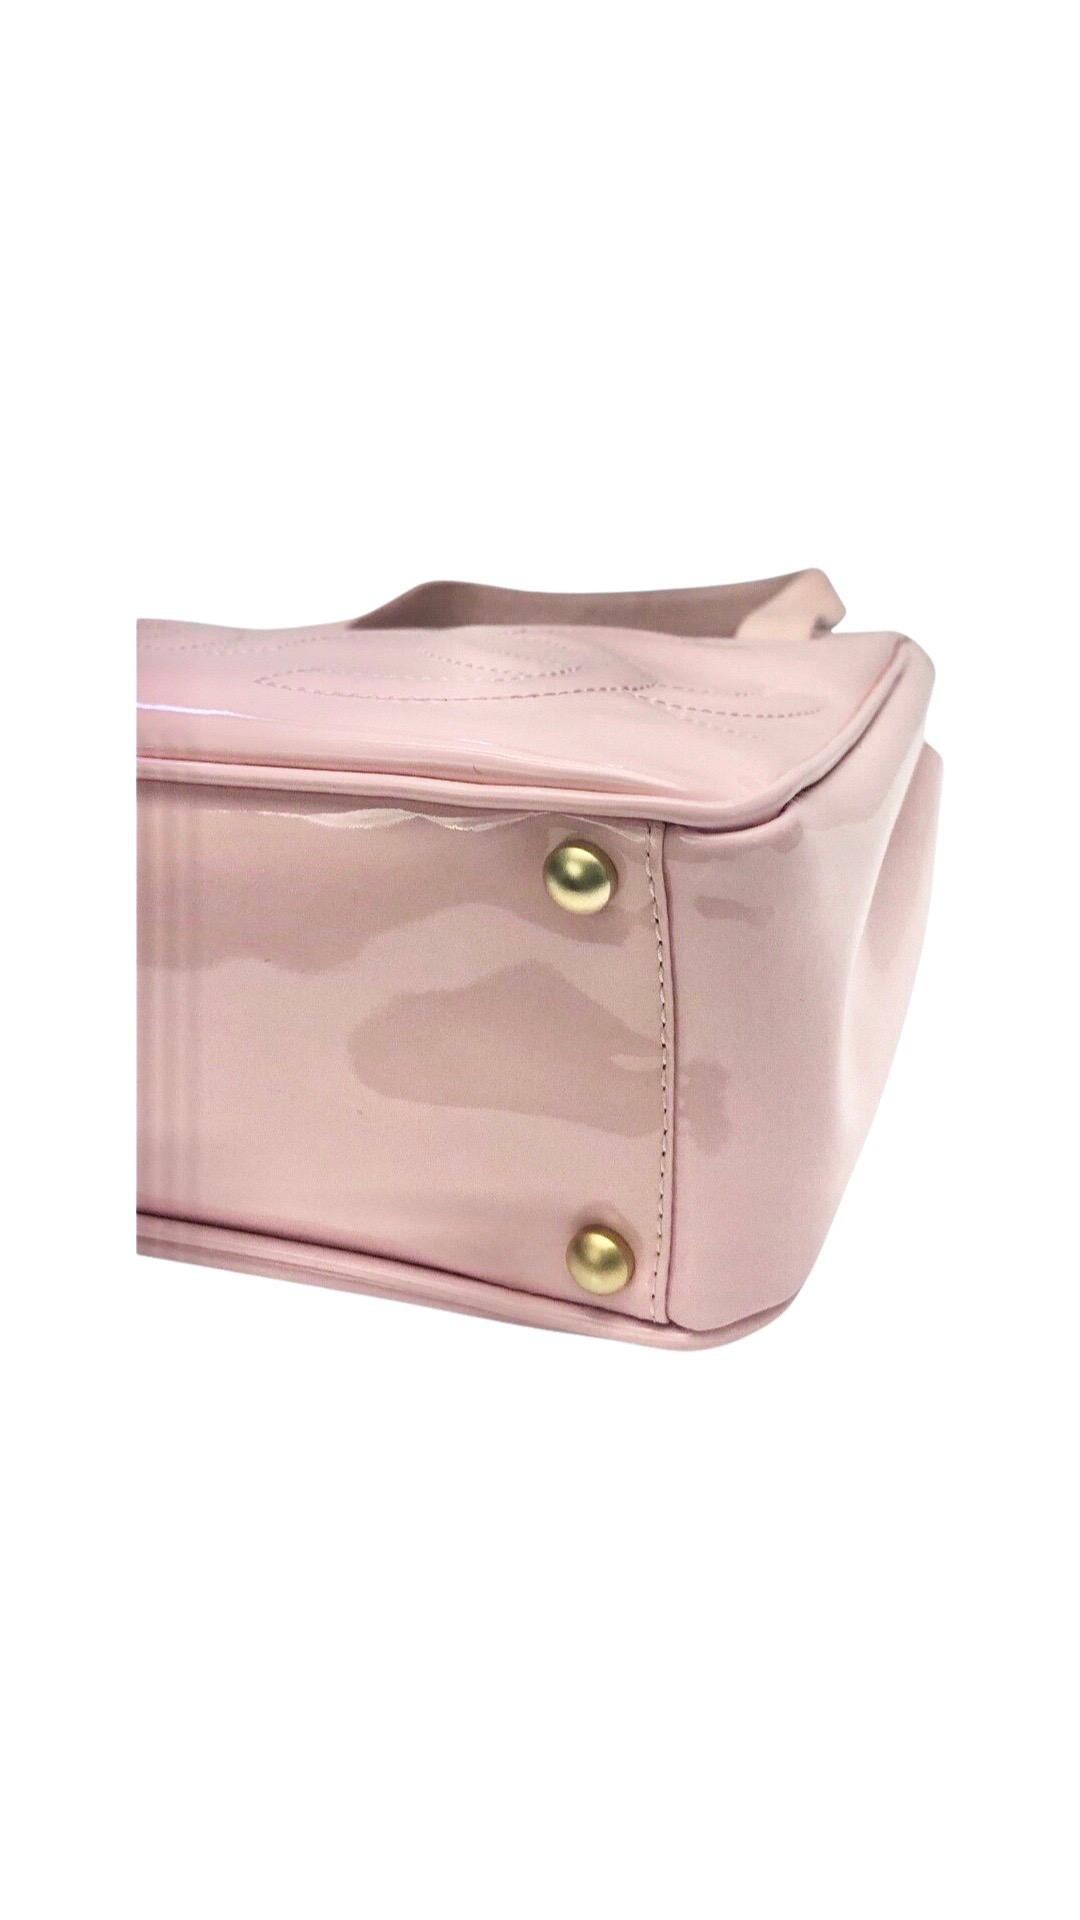 pink tote handbag